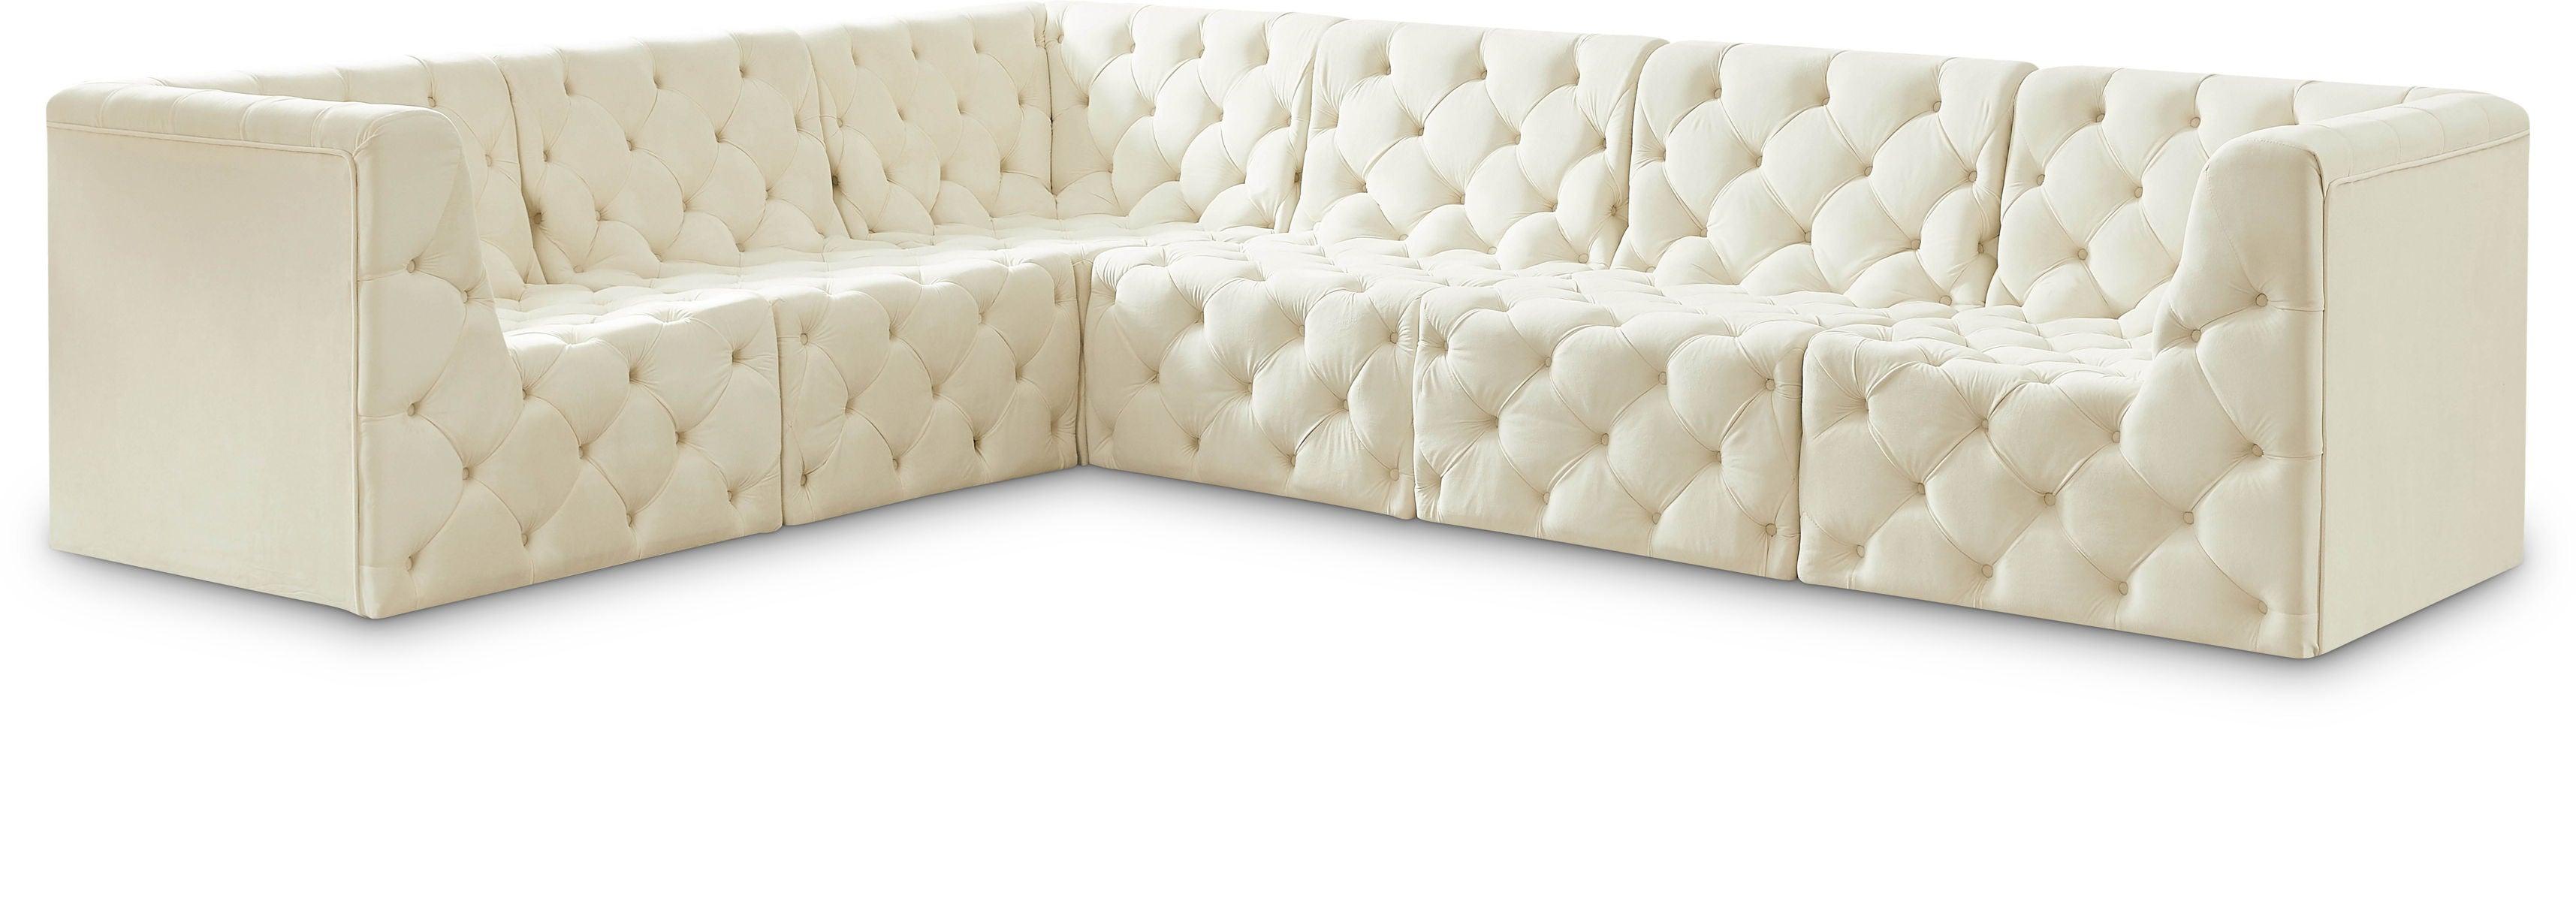 Meridian Furniture - Tuft - Modular Sectional 6 Piece - Cream - Fabric - 5th Avenue Furniture